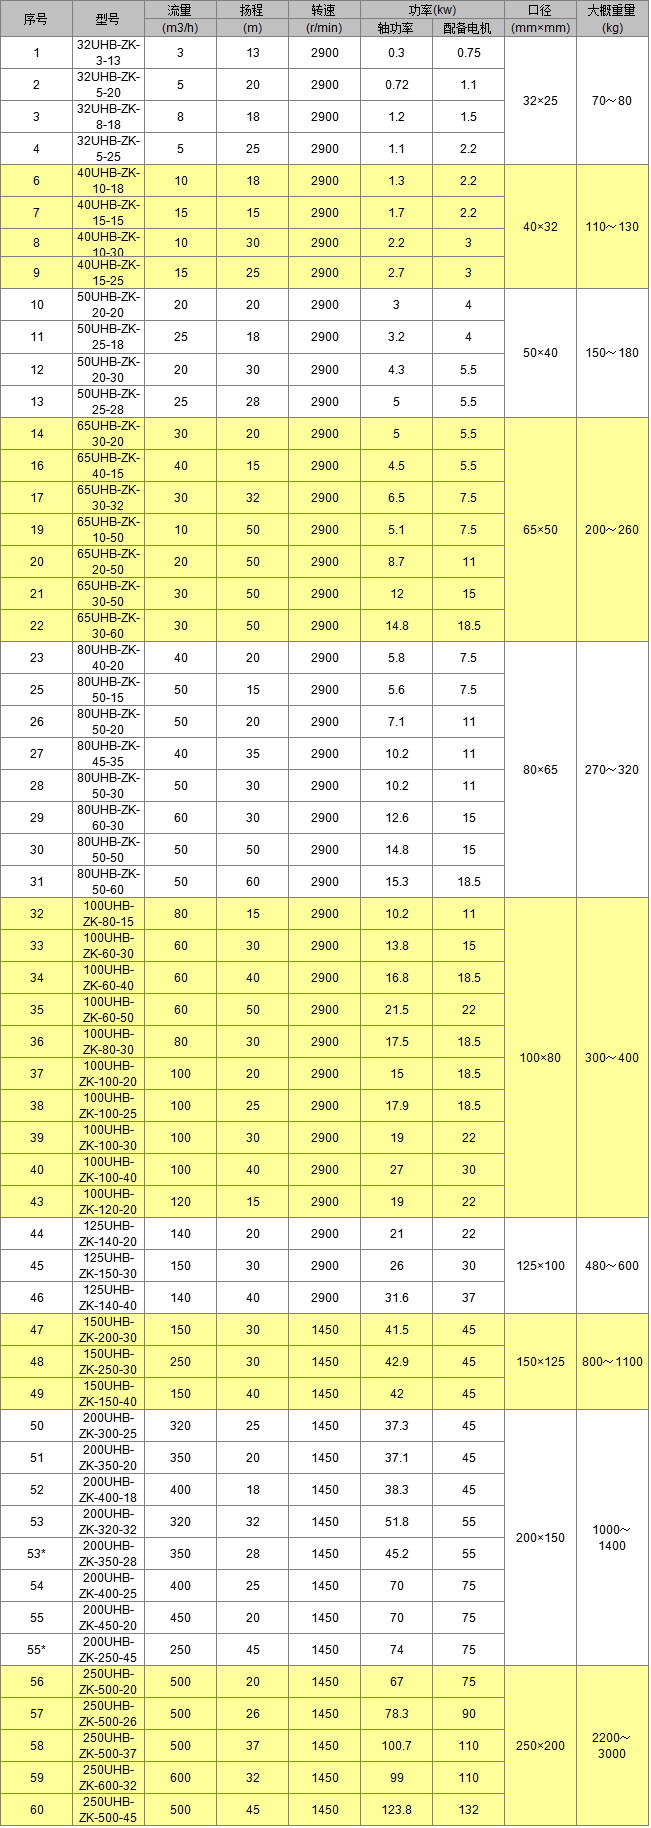 UHB-ZK型砂浆泵性能参数表